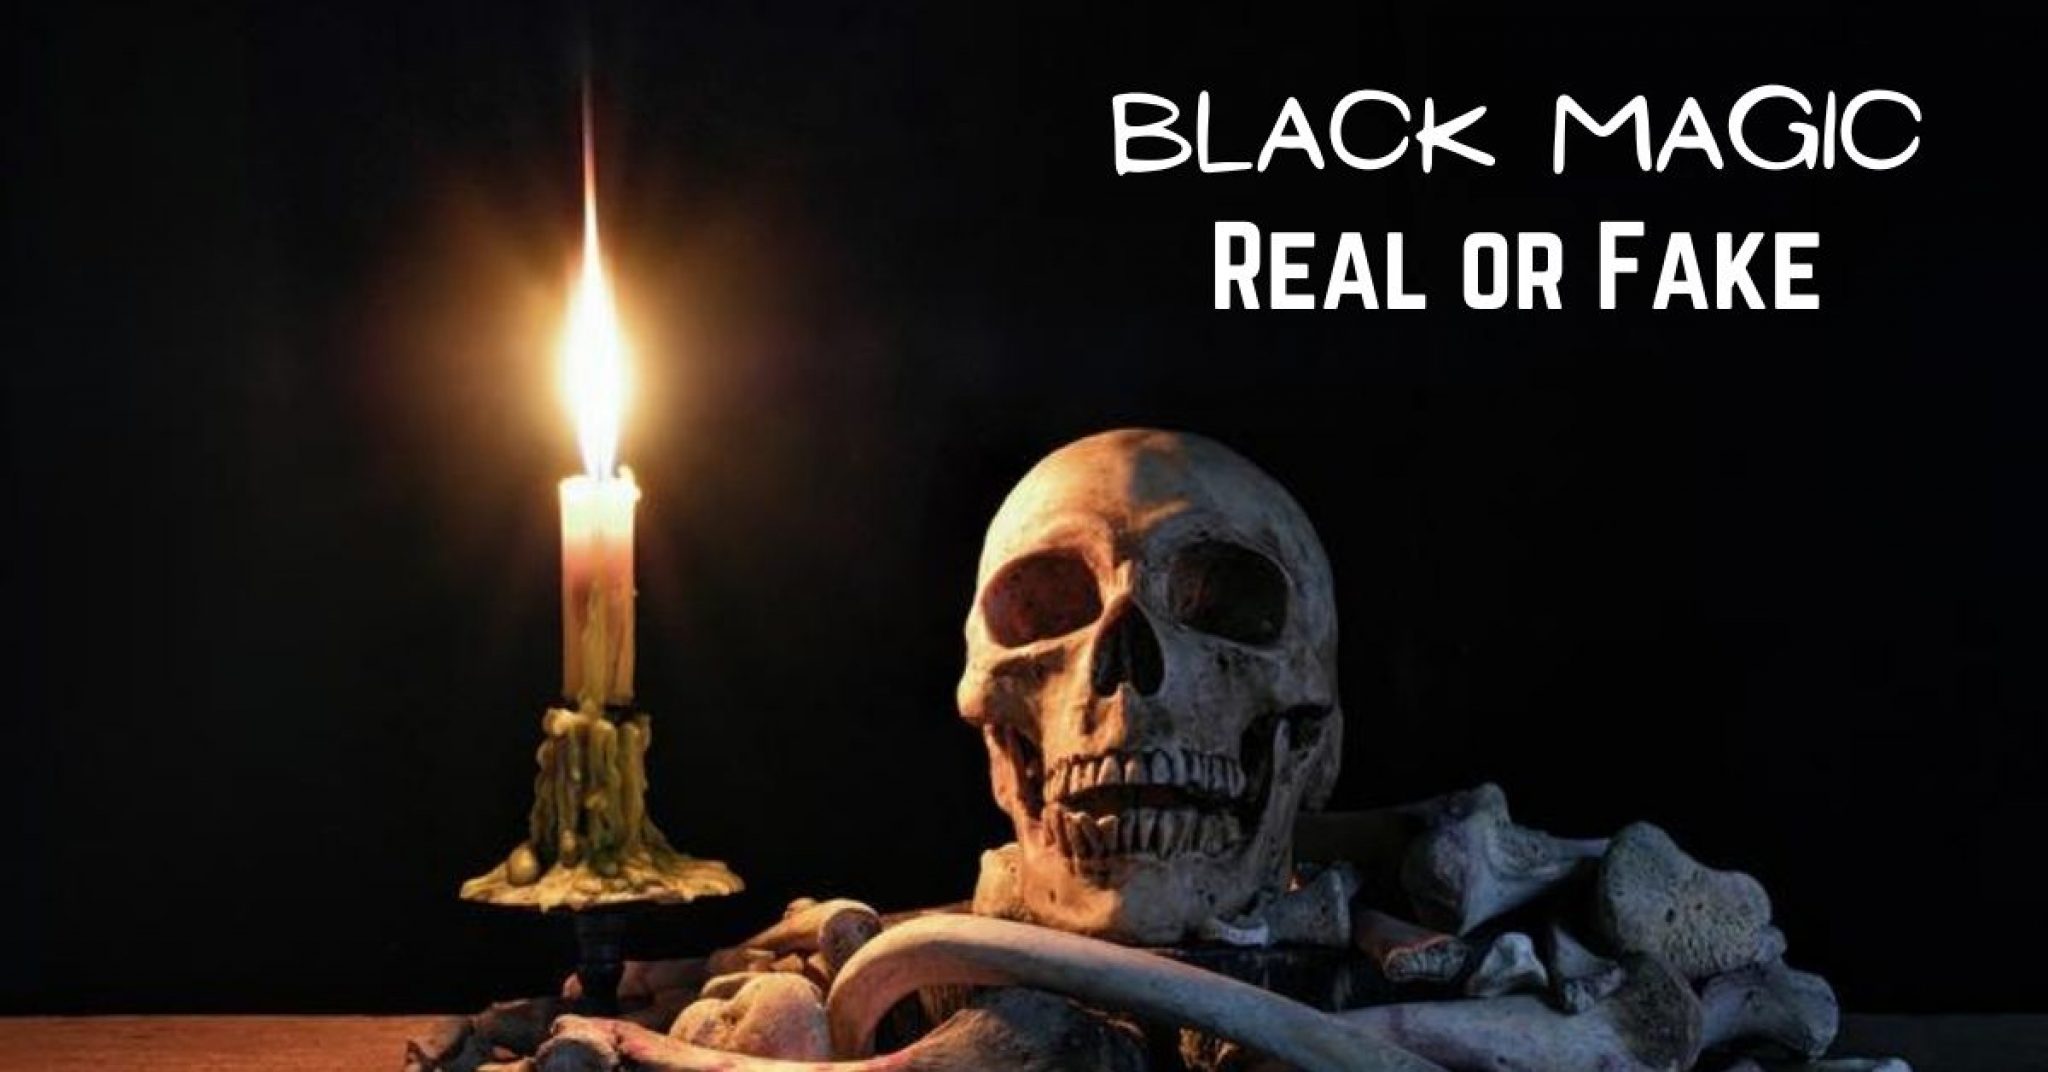  Is Black Magic Real?